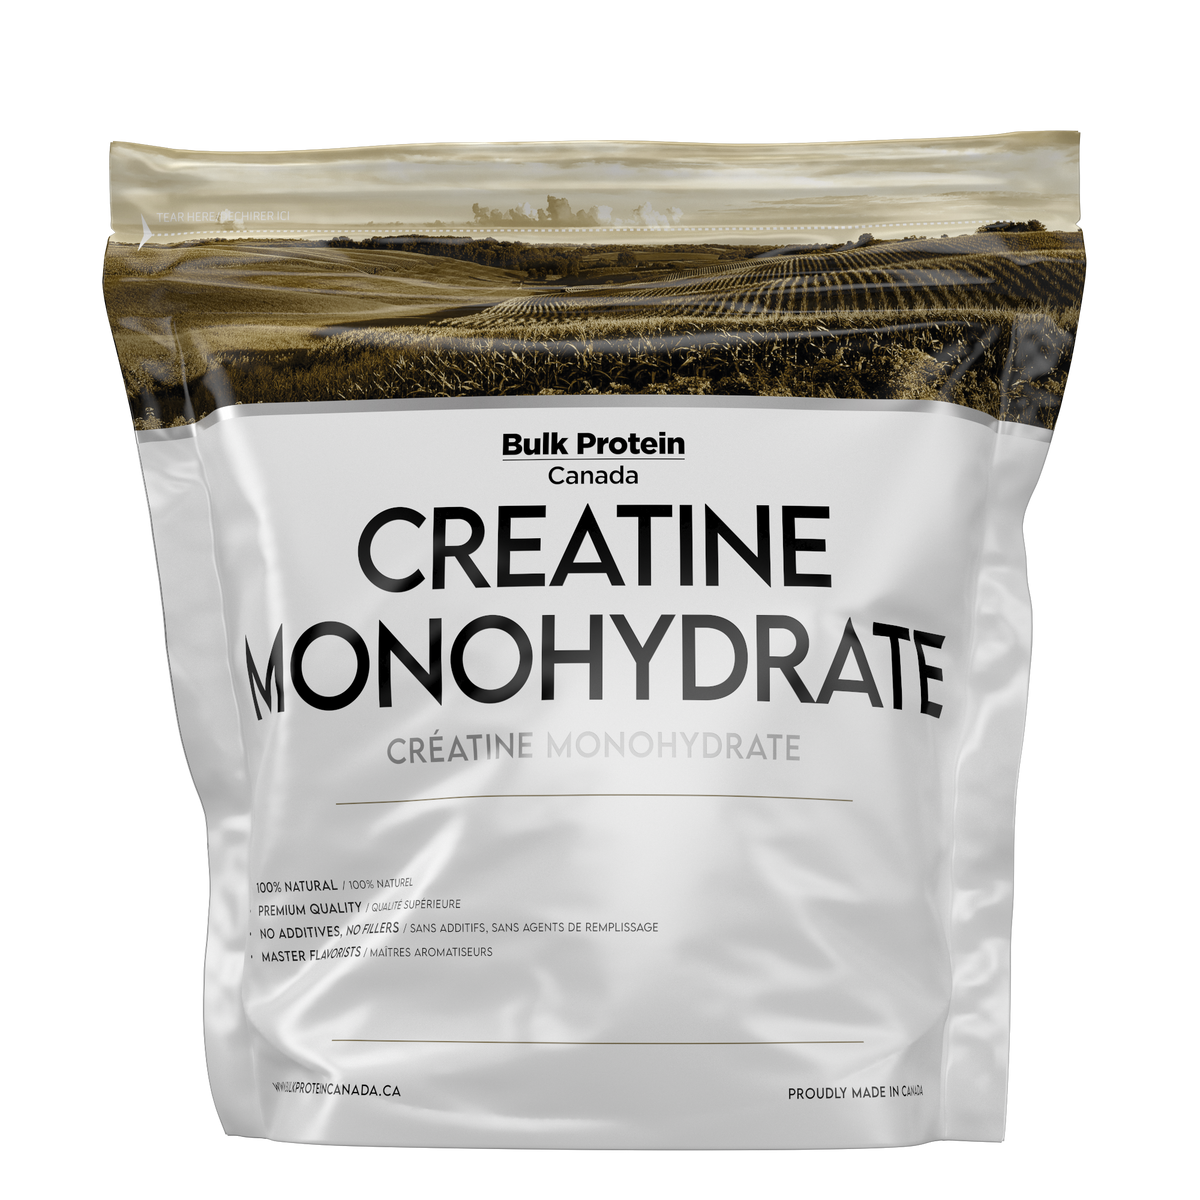 Bulk Protein Canada - Creatine Monohydrate - 100% Premium Canadian Powder